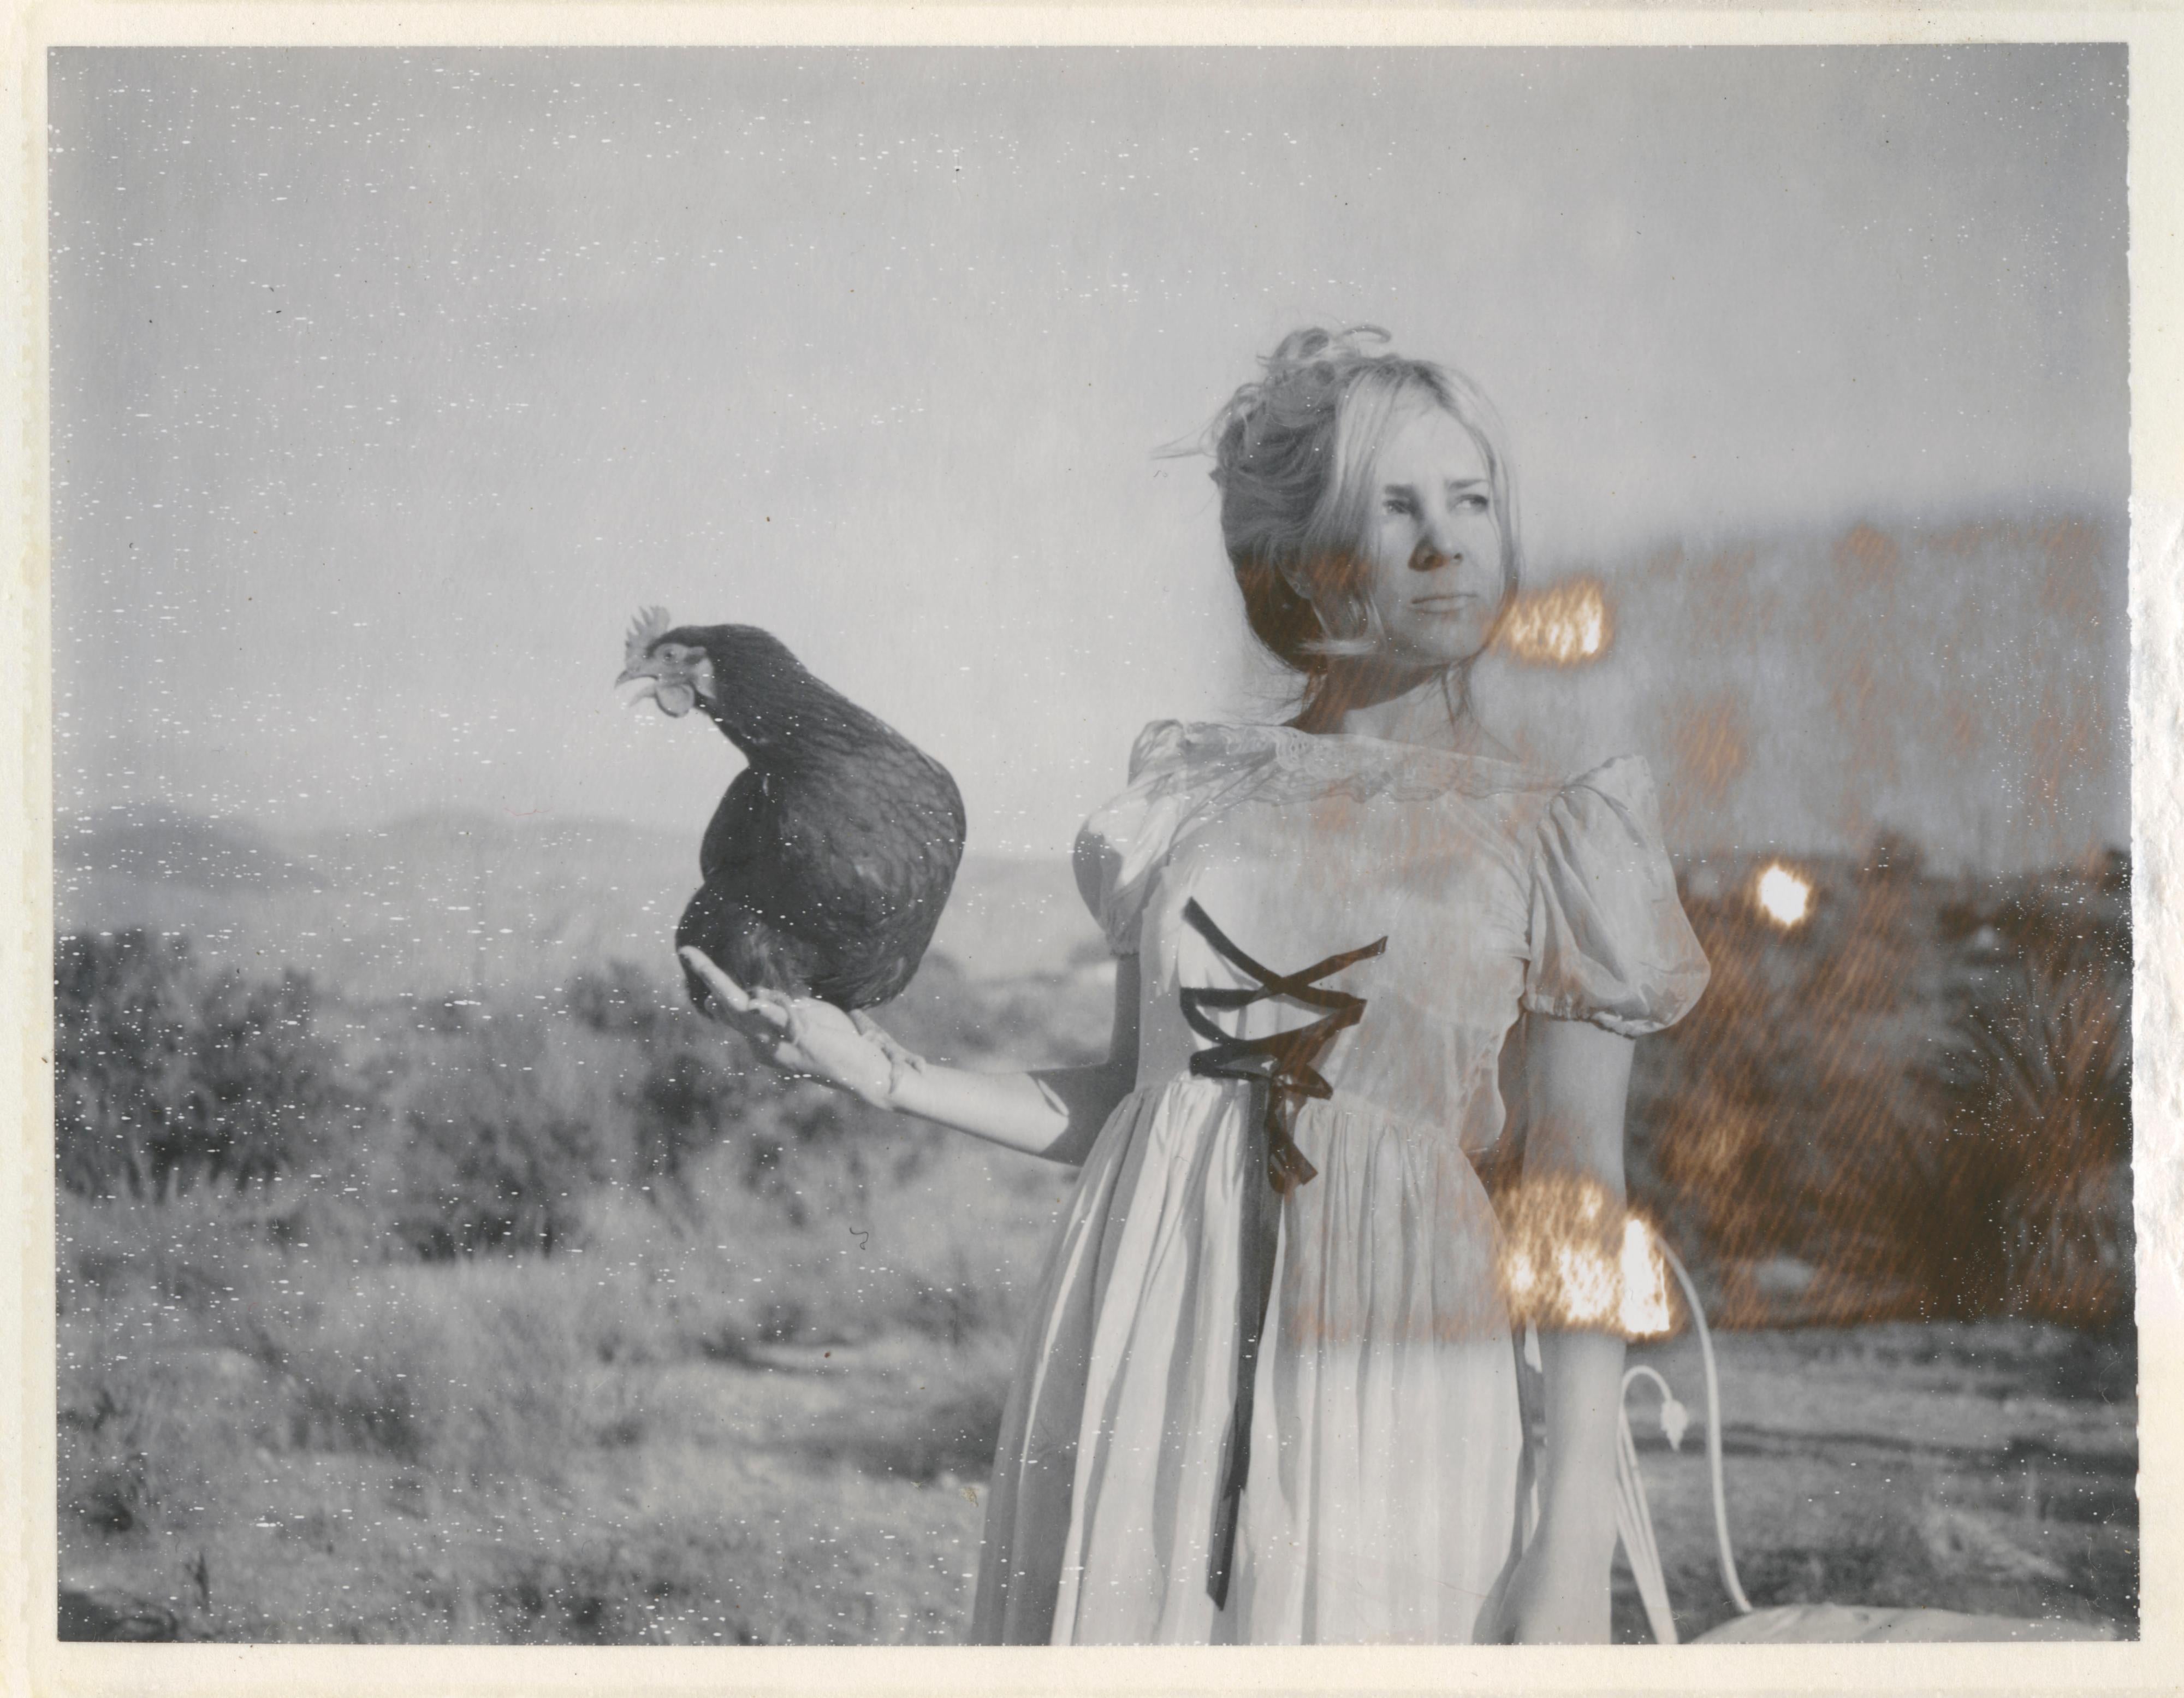 Stefanie Schneider Portrait Photograph - Victorian Falcon (Chicks and Chicks and sometimes Cocks) - Polaroid, Contemporary